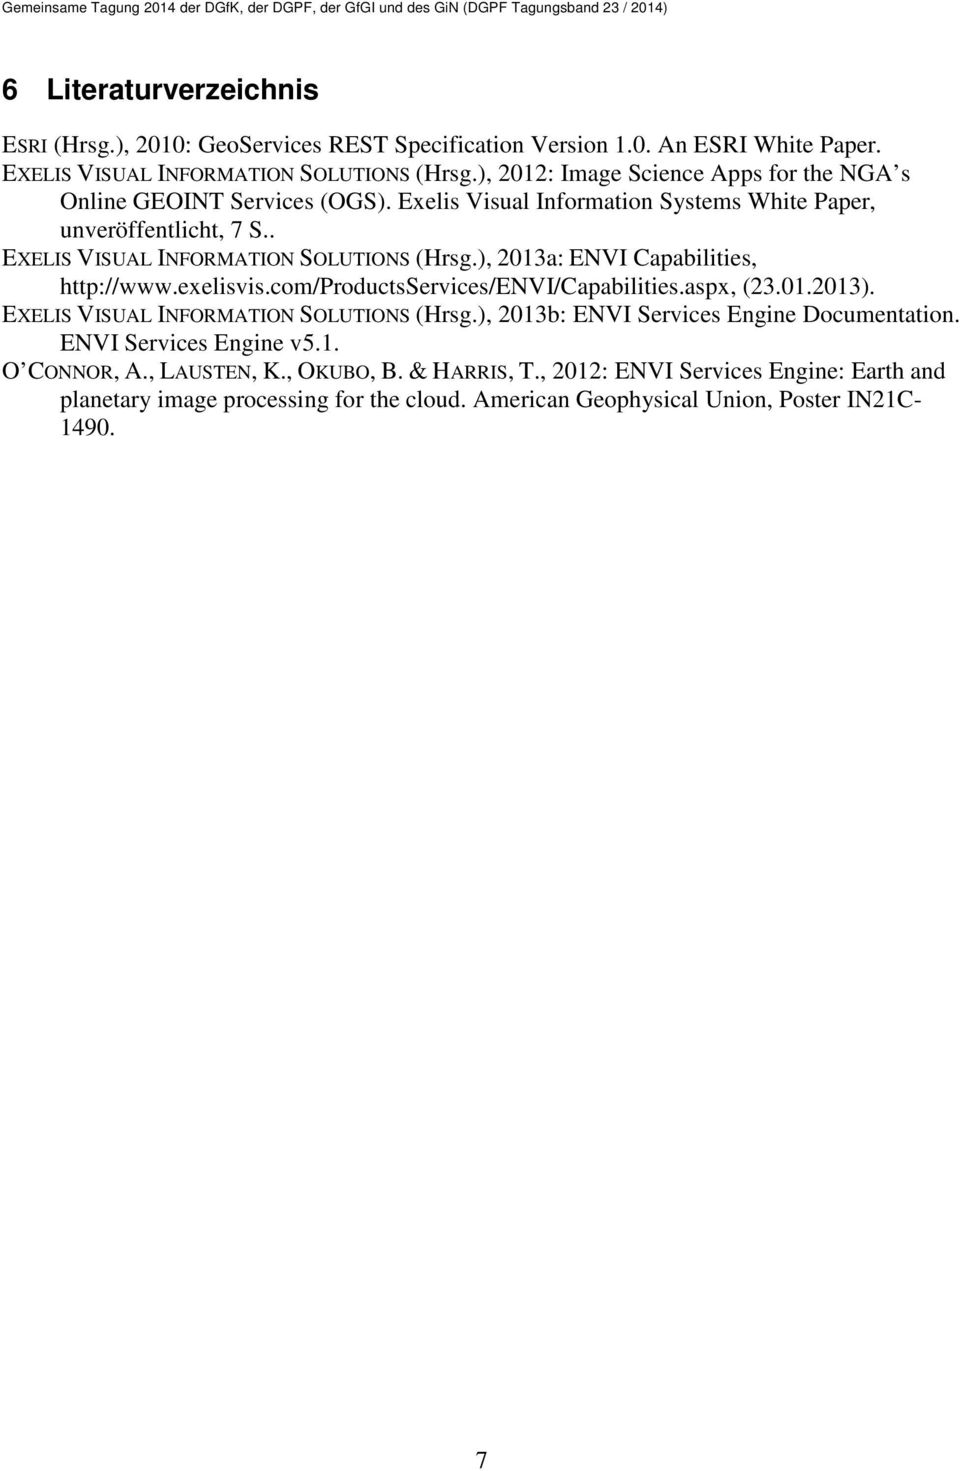 ), 2013a: ENVI Capabilities, http://www.exelisvis.com/productsservices/envi/capabilities.aspx, (23.01.2013). EXELIS VISUAL INFORMATION SOLUTIONS (Hrsg.